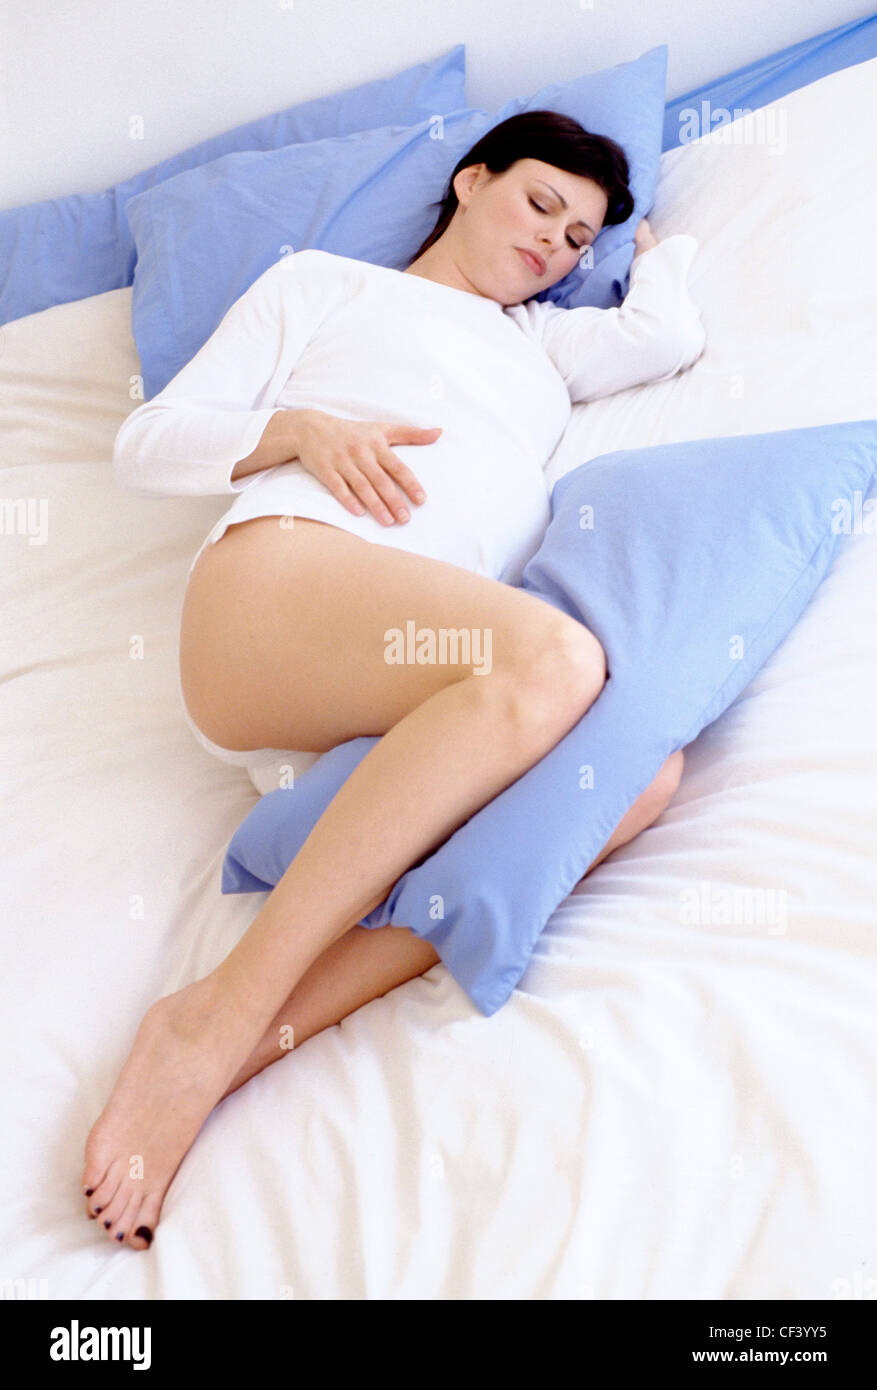 4,600+ Pillow Between Legs Photos Stock Photos, Pictures & Royalty